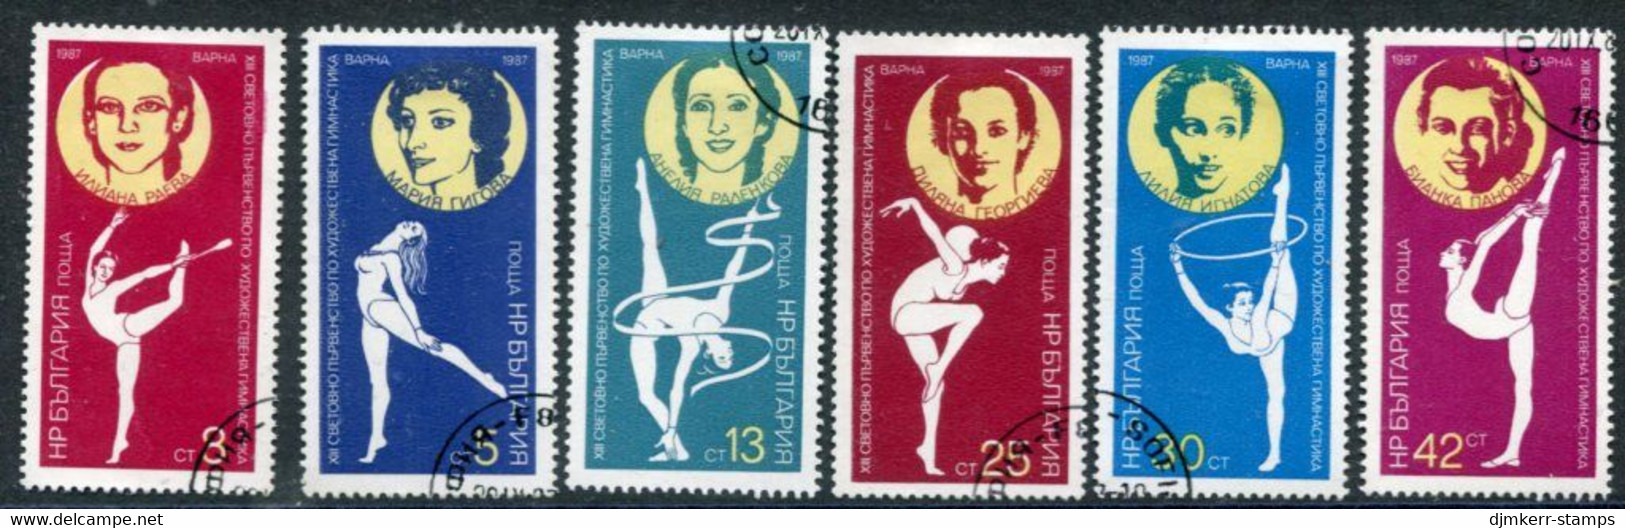 BULGARIA 1987 Rhythmic Gymnastics Used. .  Michel 3588-93 - Used Stamps